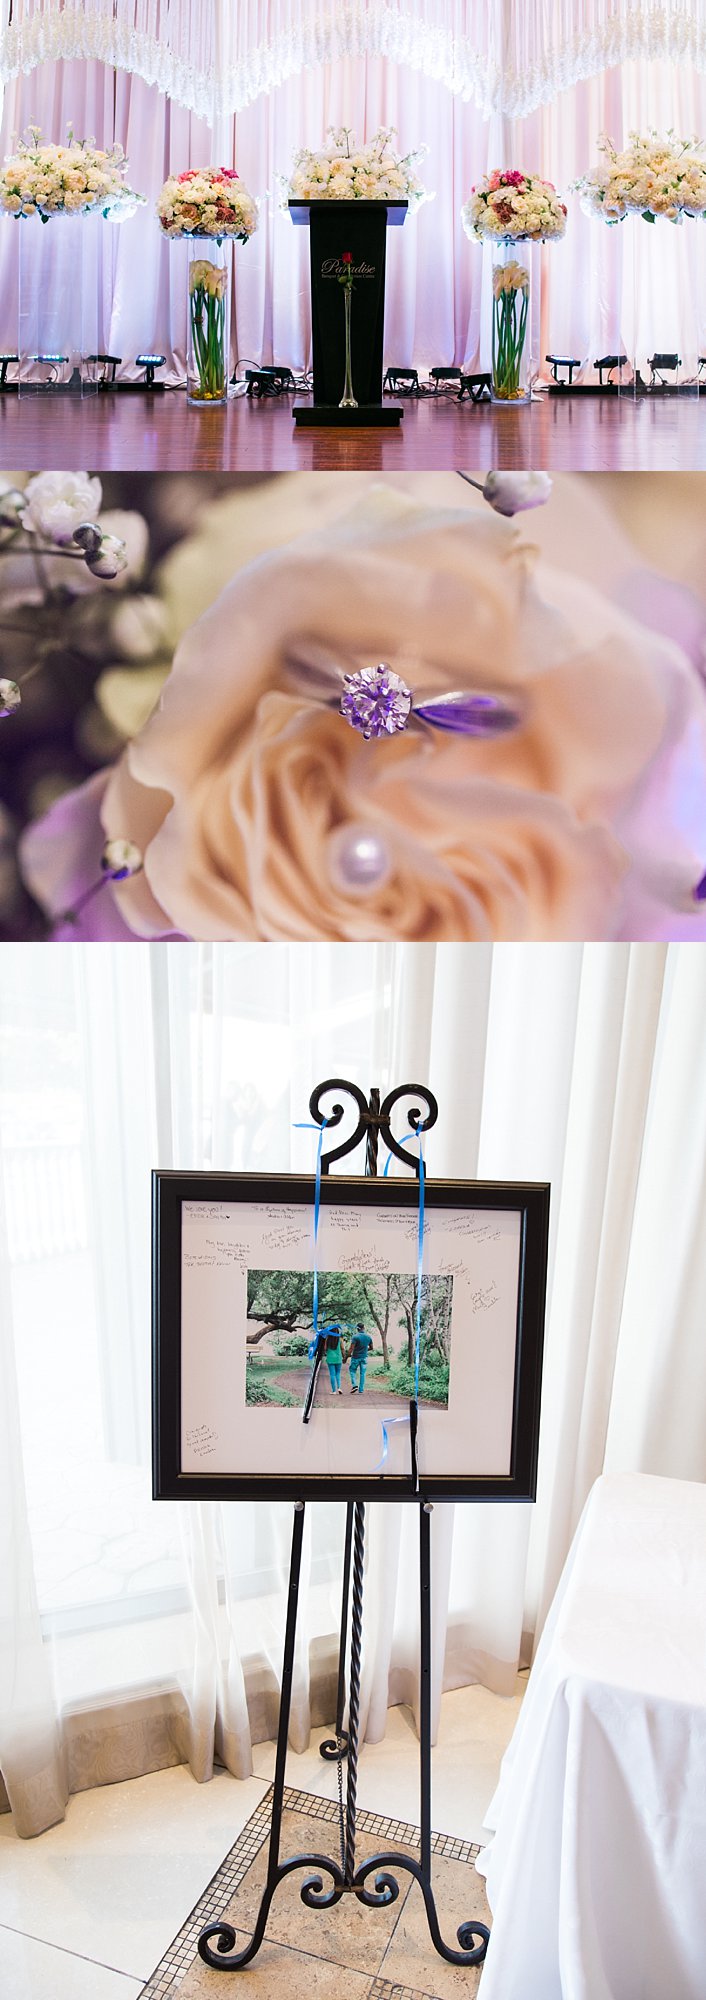 Jennifer Blaak Photography, Toronto wedding photographer, Hamilton wedding photographer, Paradise Banquet Hall, Indoor decorations, signing board